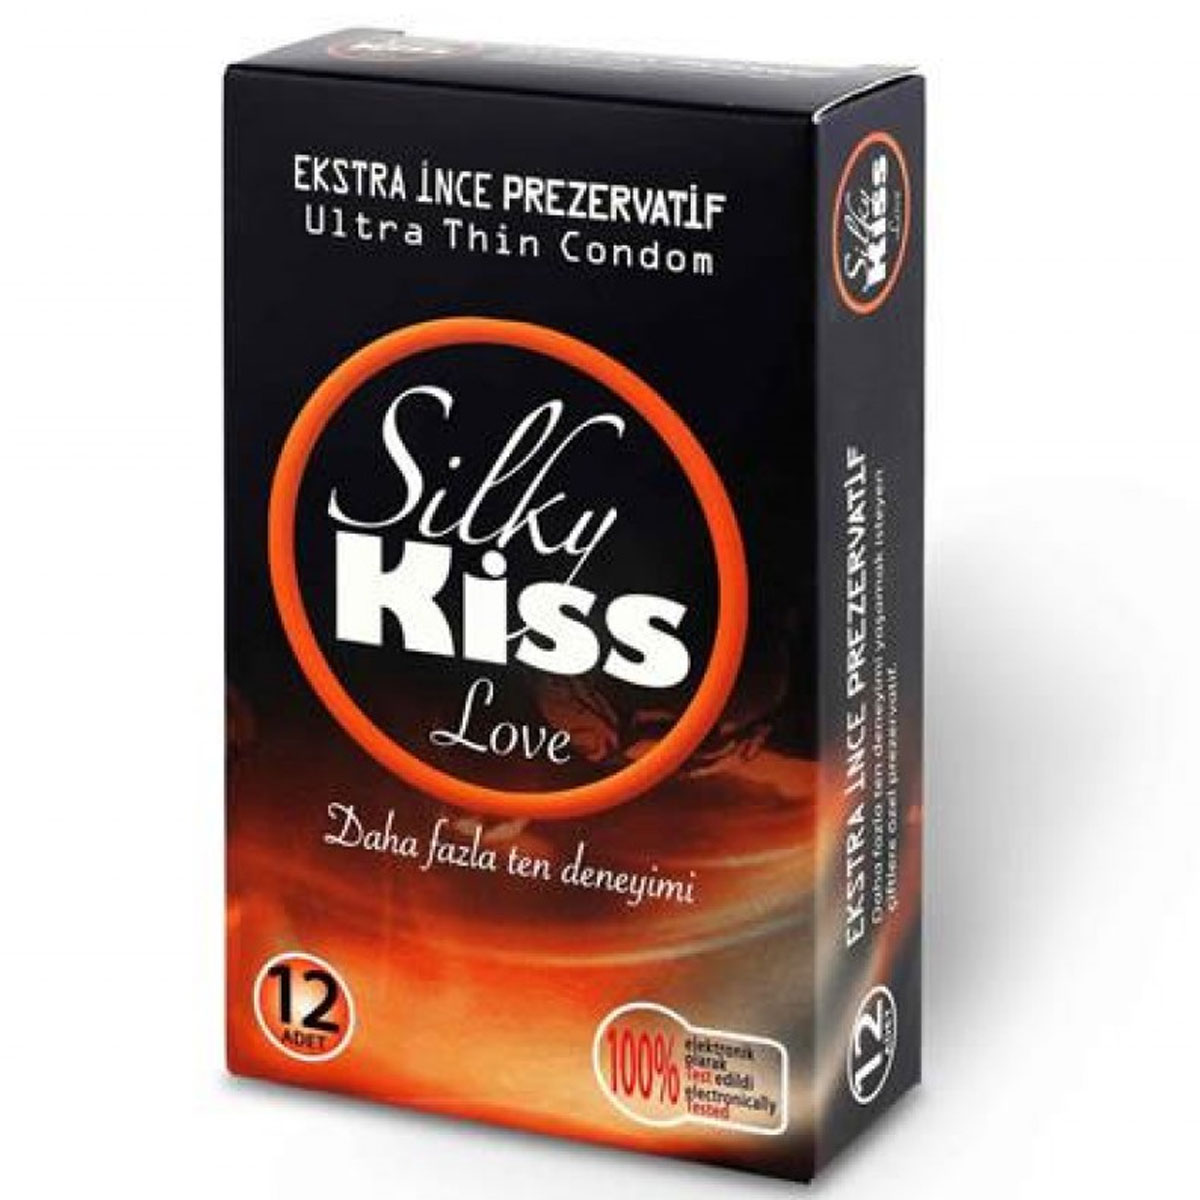 Silky Kiss Ultra nce Prezervatif C-1572